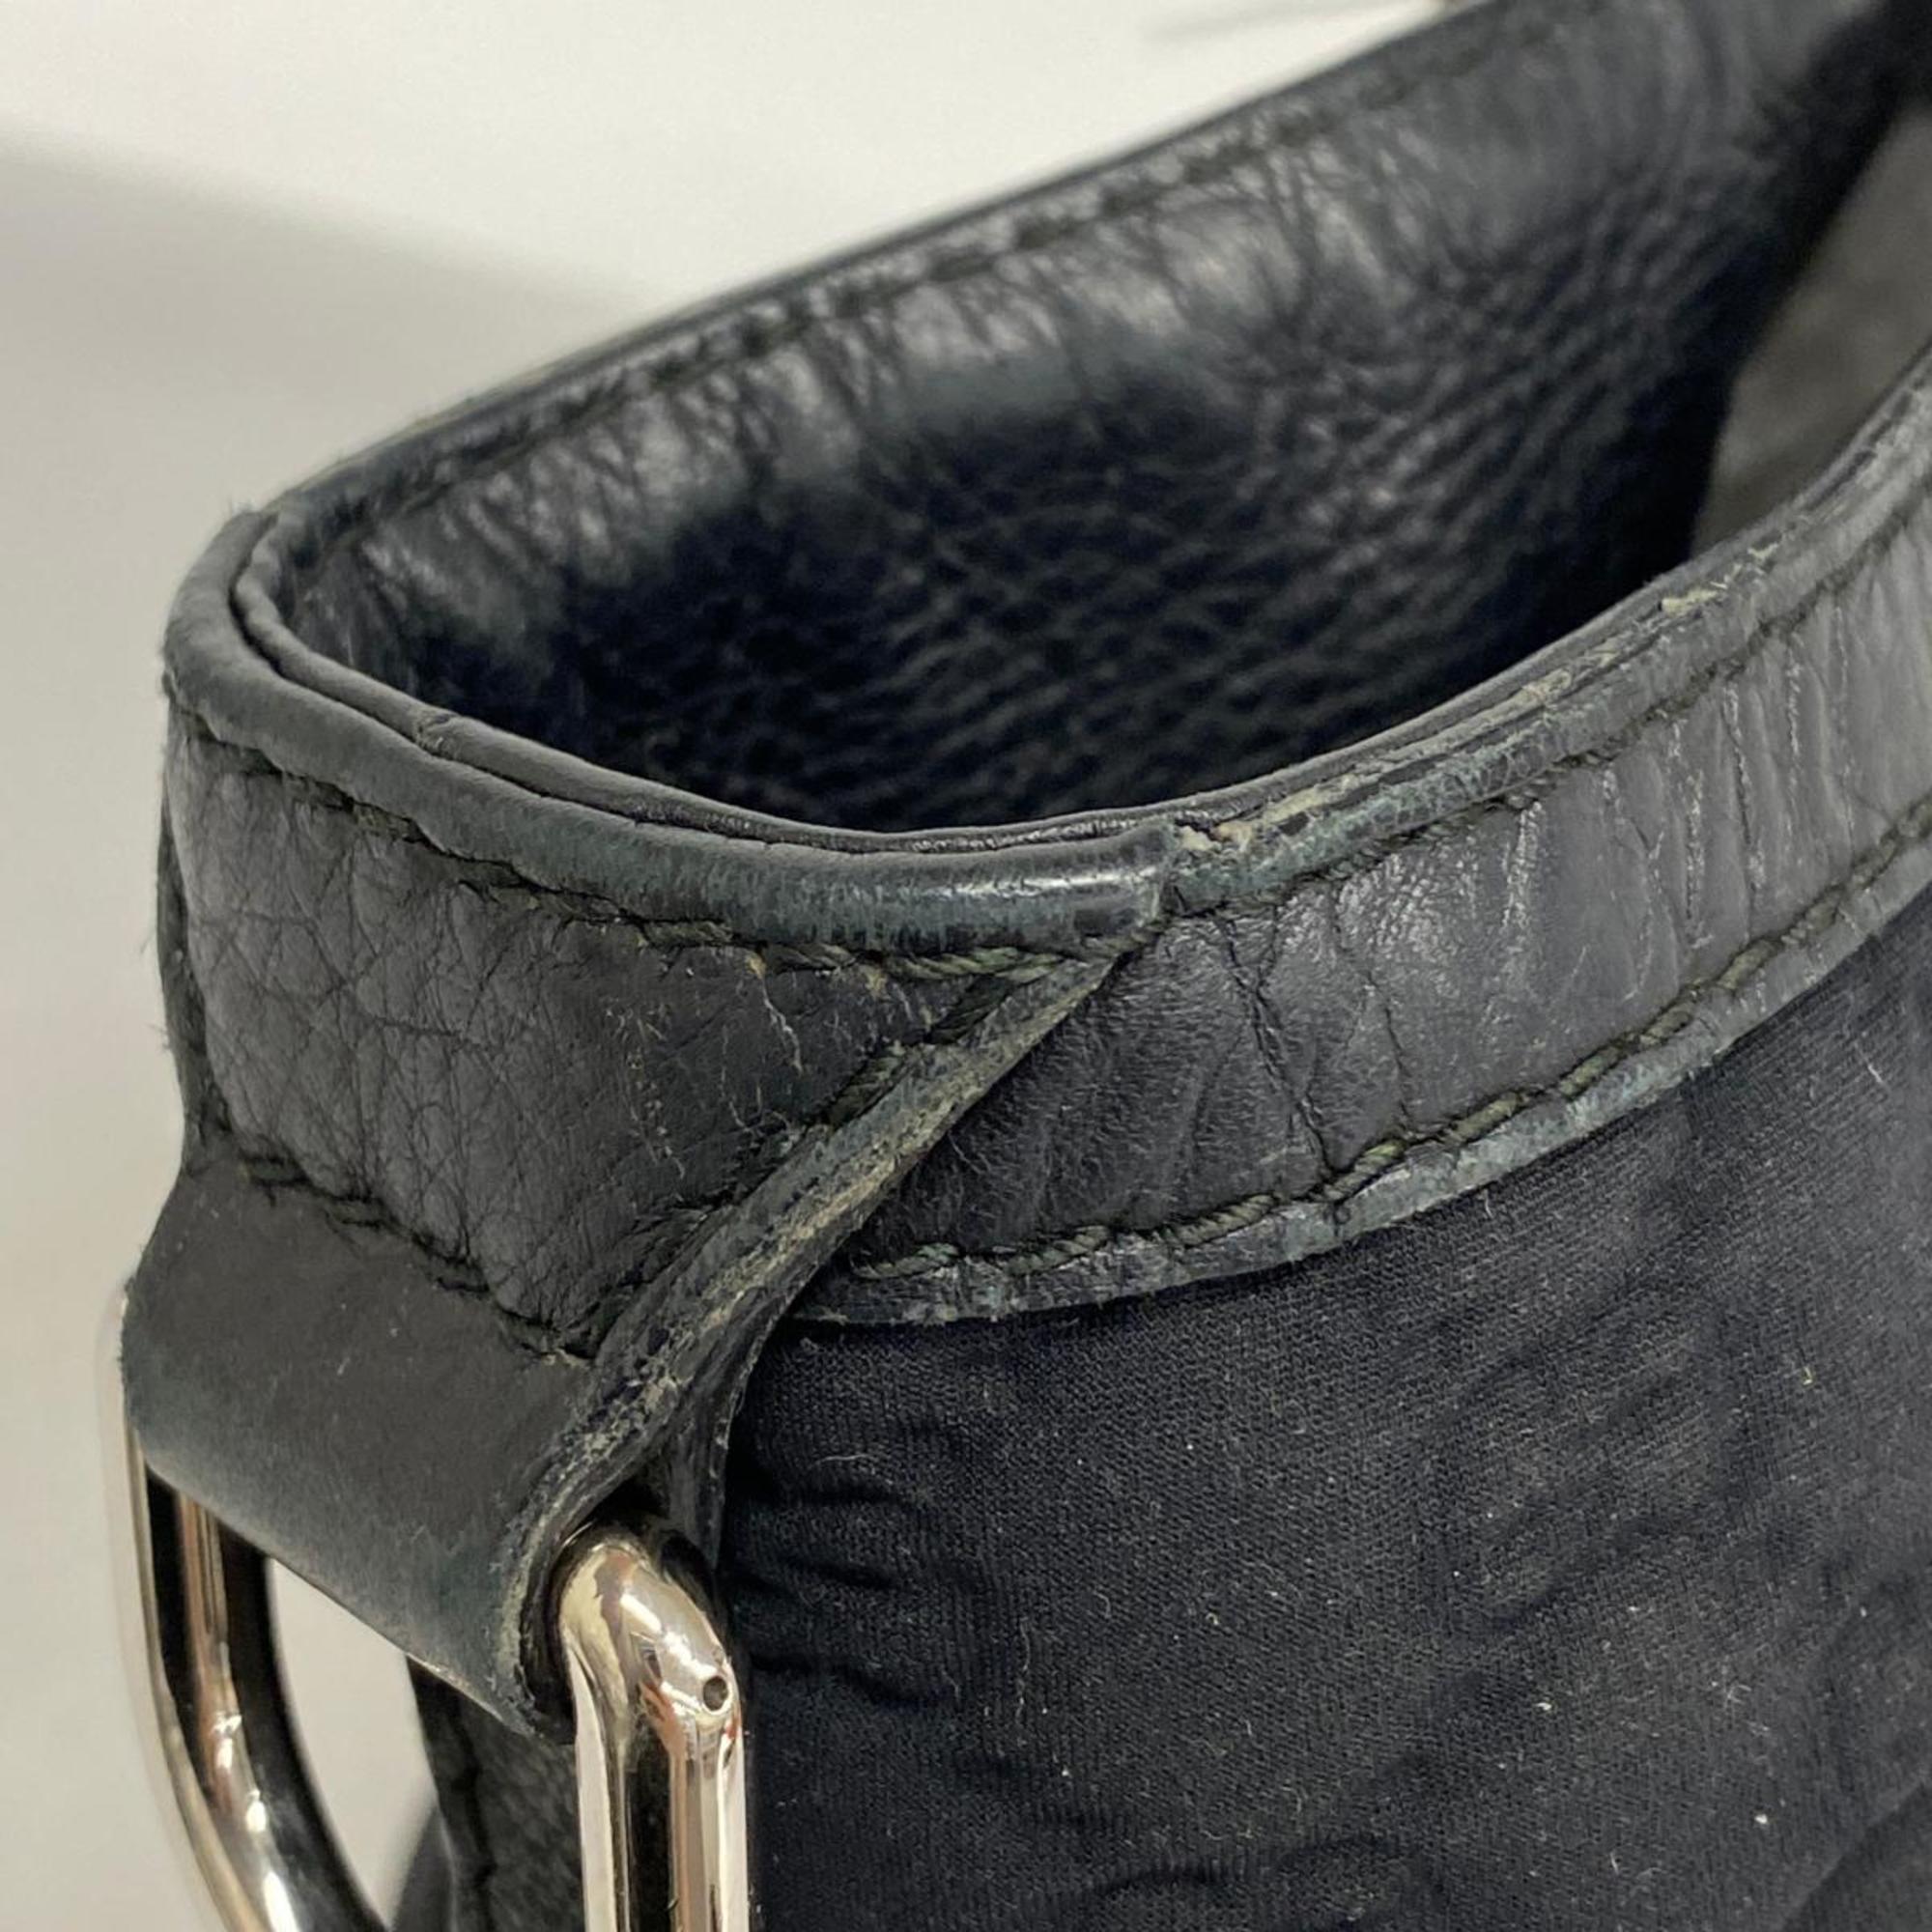 Gucci Tote Bag Neoprene 241101 Leather Black Women's